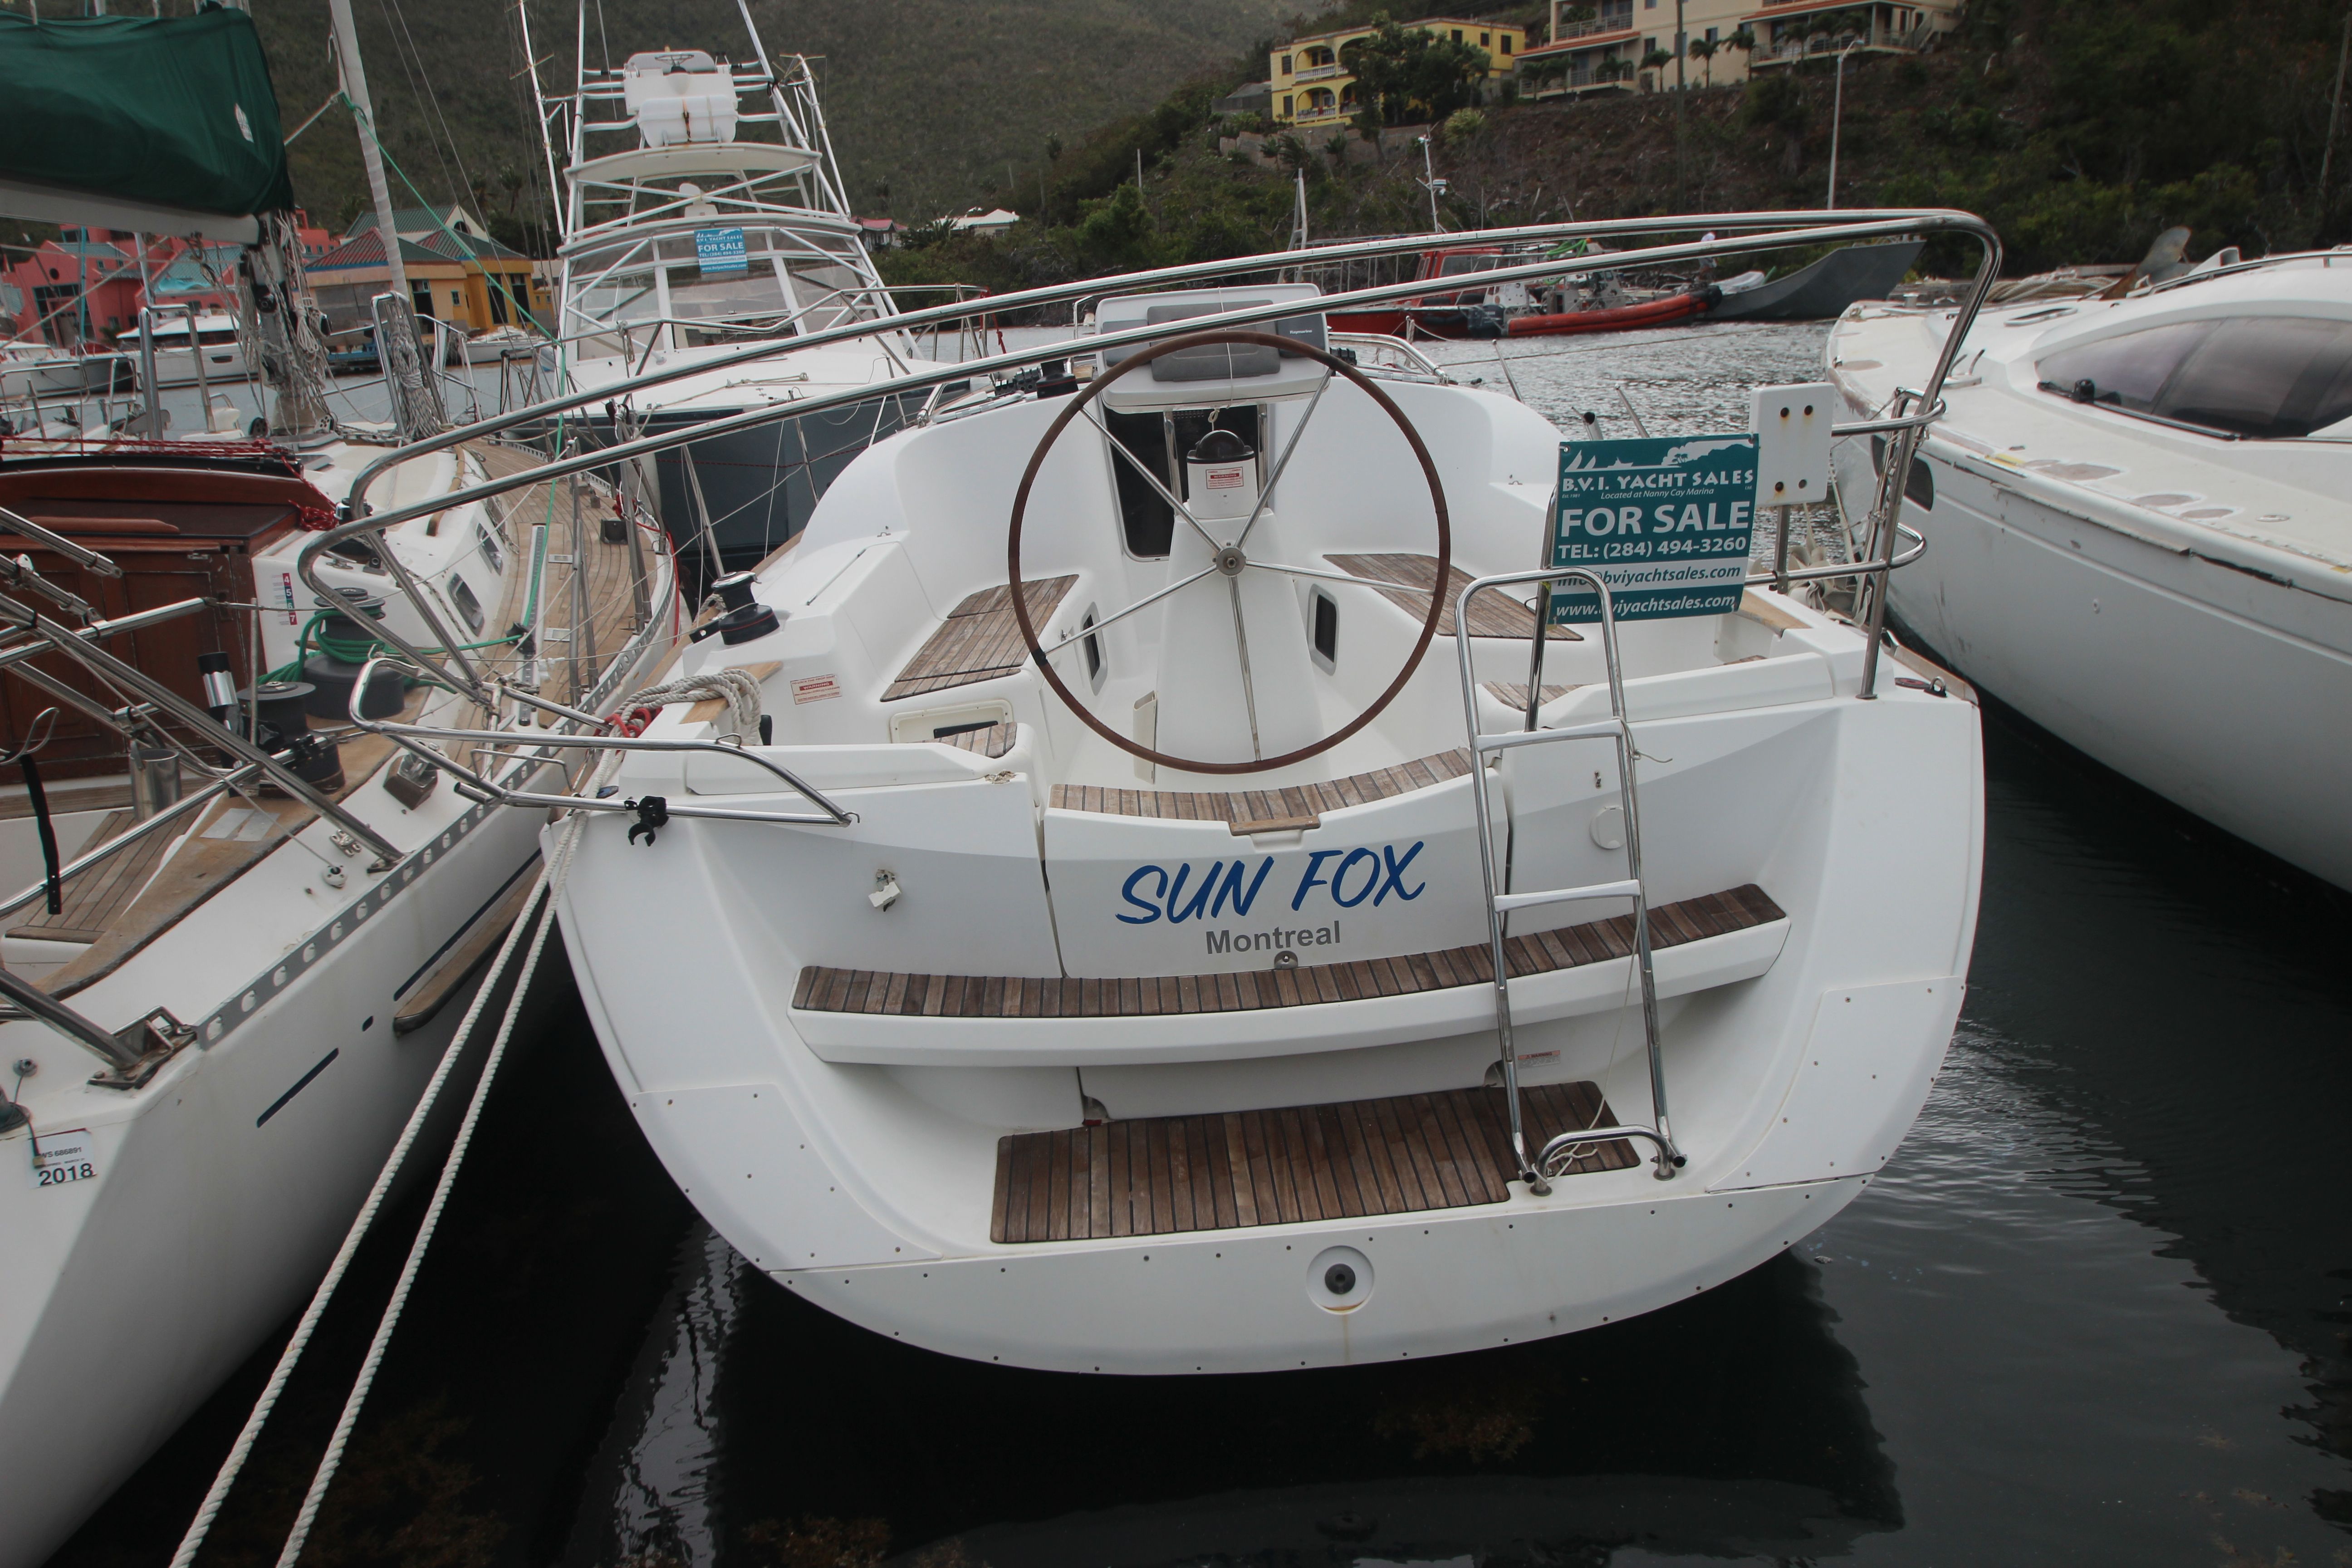 jeanneau 36i sailboat for sale